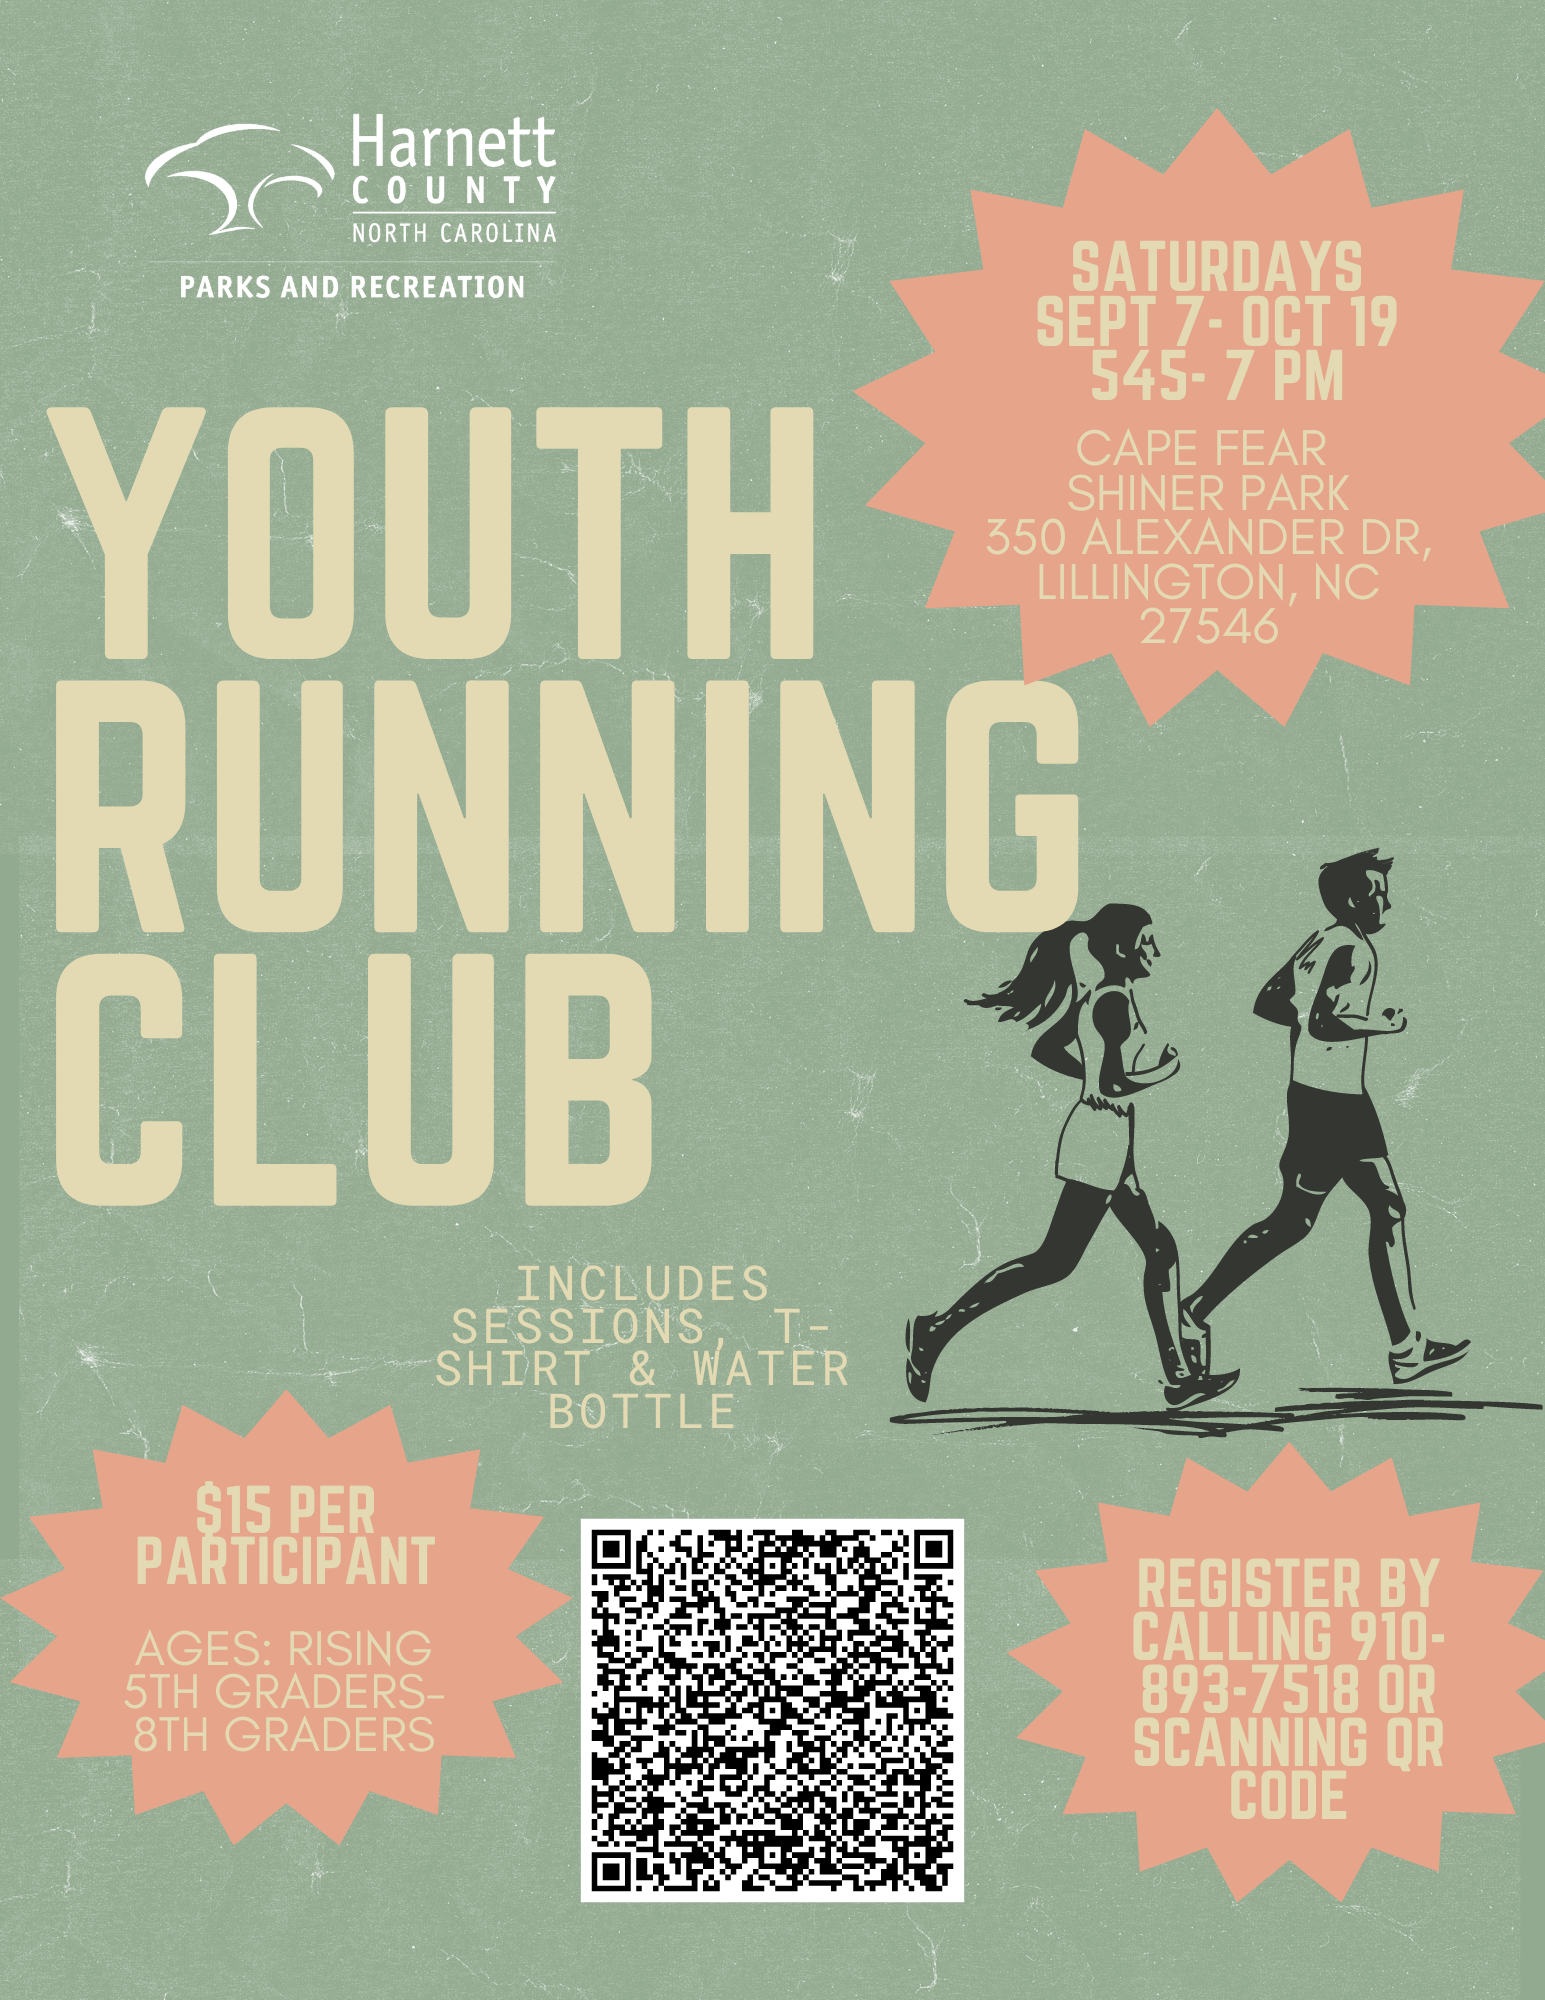 Harnett County Youth Running Club